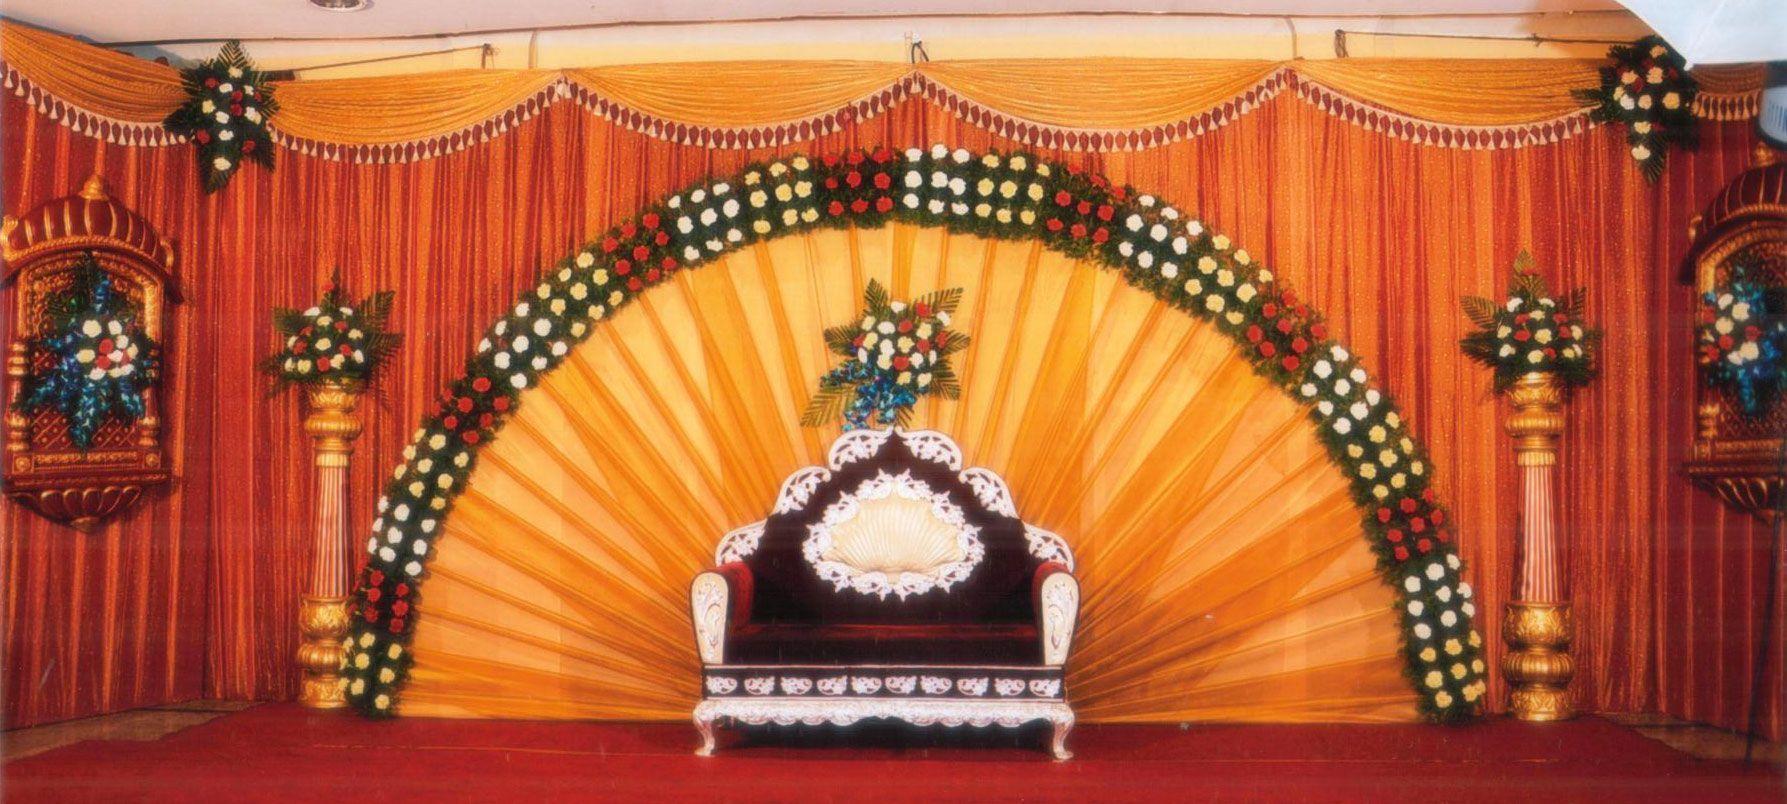 Best Wedding Stage Decoration Photo 2015. Wedding Decorations Ideas